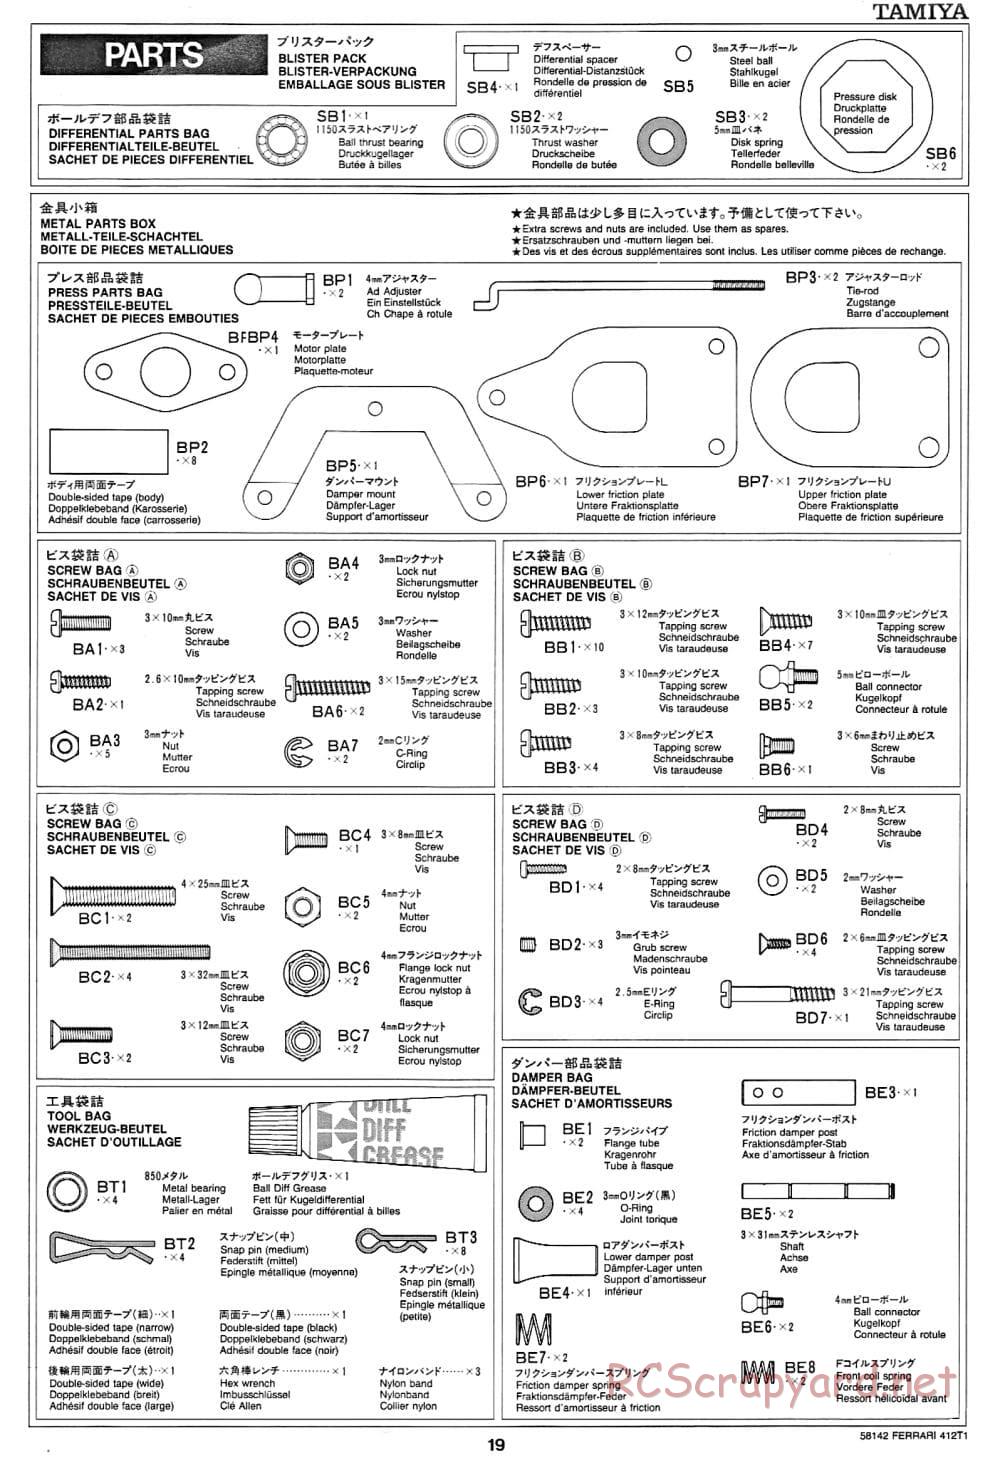 Tamiya - Ferrari 412T1 - F103 Chassis - Manual - Page 19